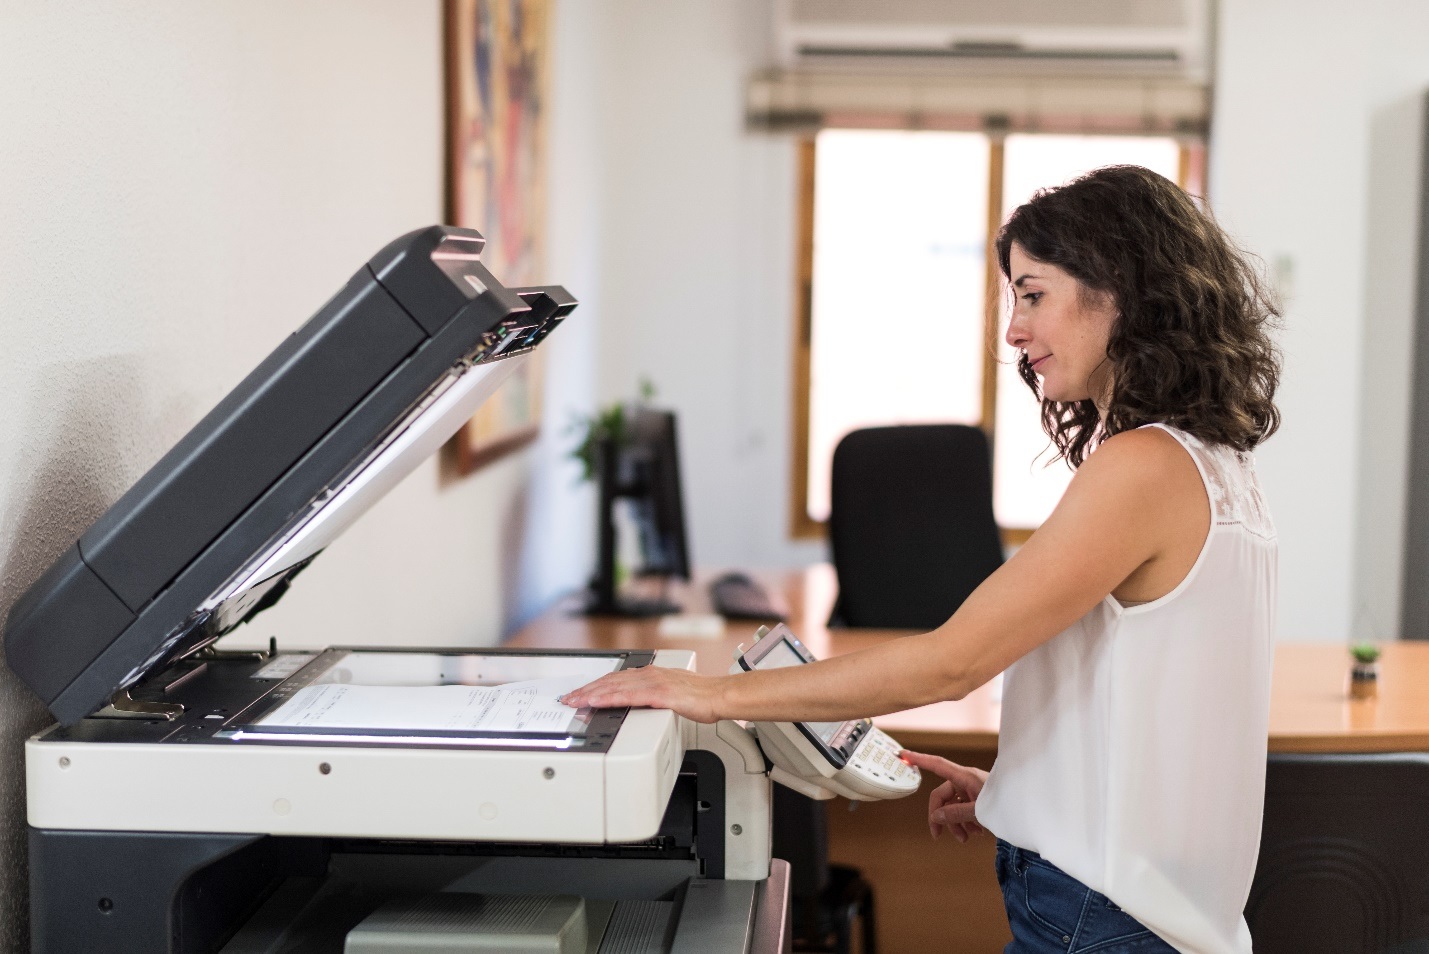 Printer Copier Repair: 4 Benefits Of Remote Support